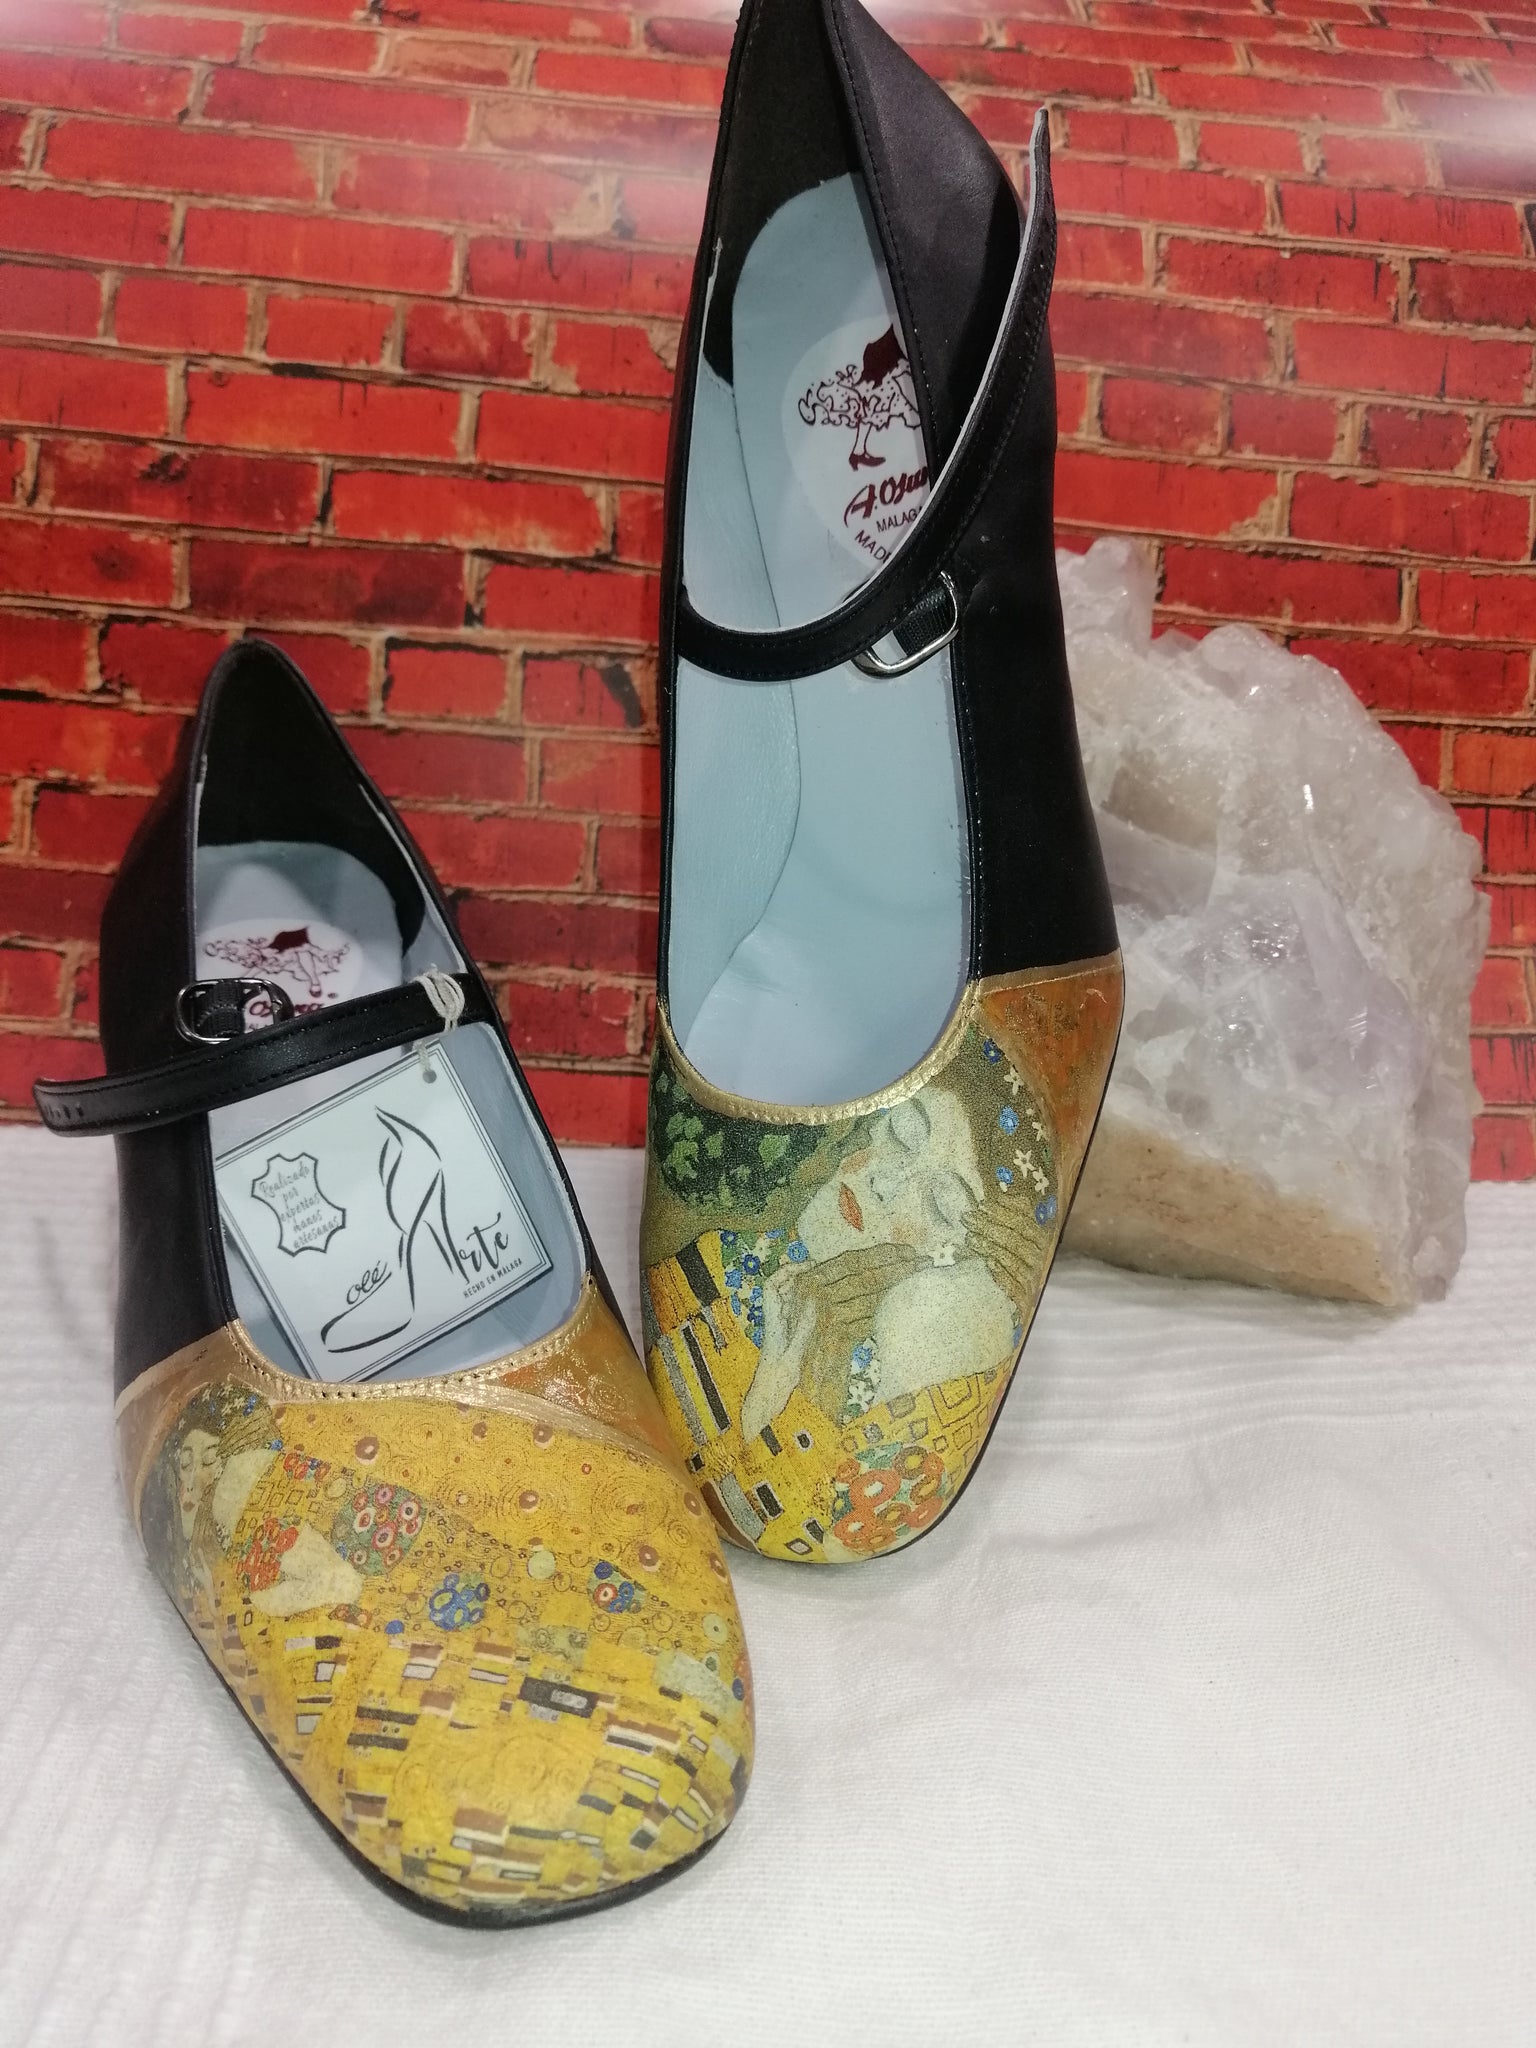 Zapato modelo Klimt n. 40